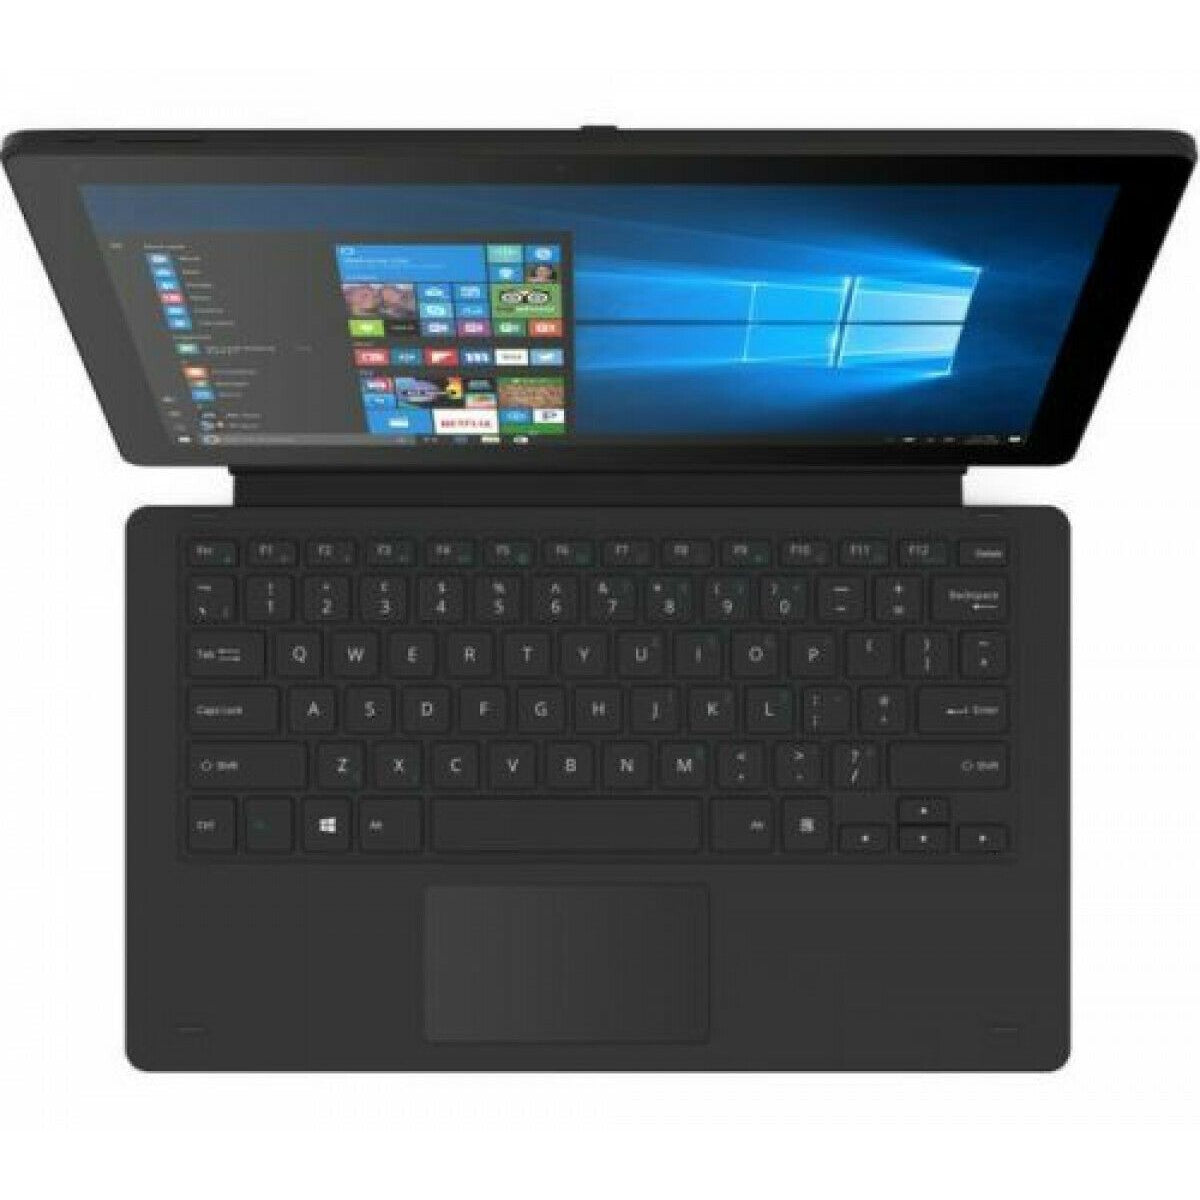 Linx 12X64 12.5 Full HD 2 in 1 Laptop Tablet with Keyboard 4GB RAM 64GB Win 10